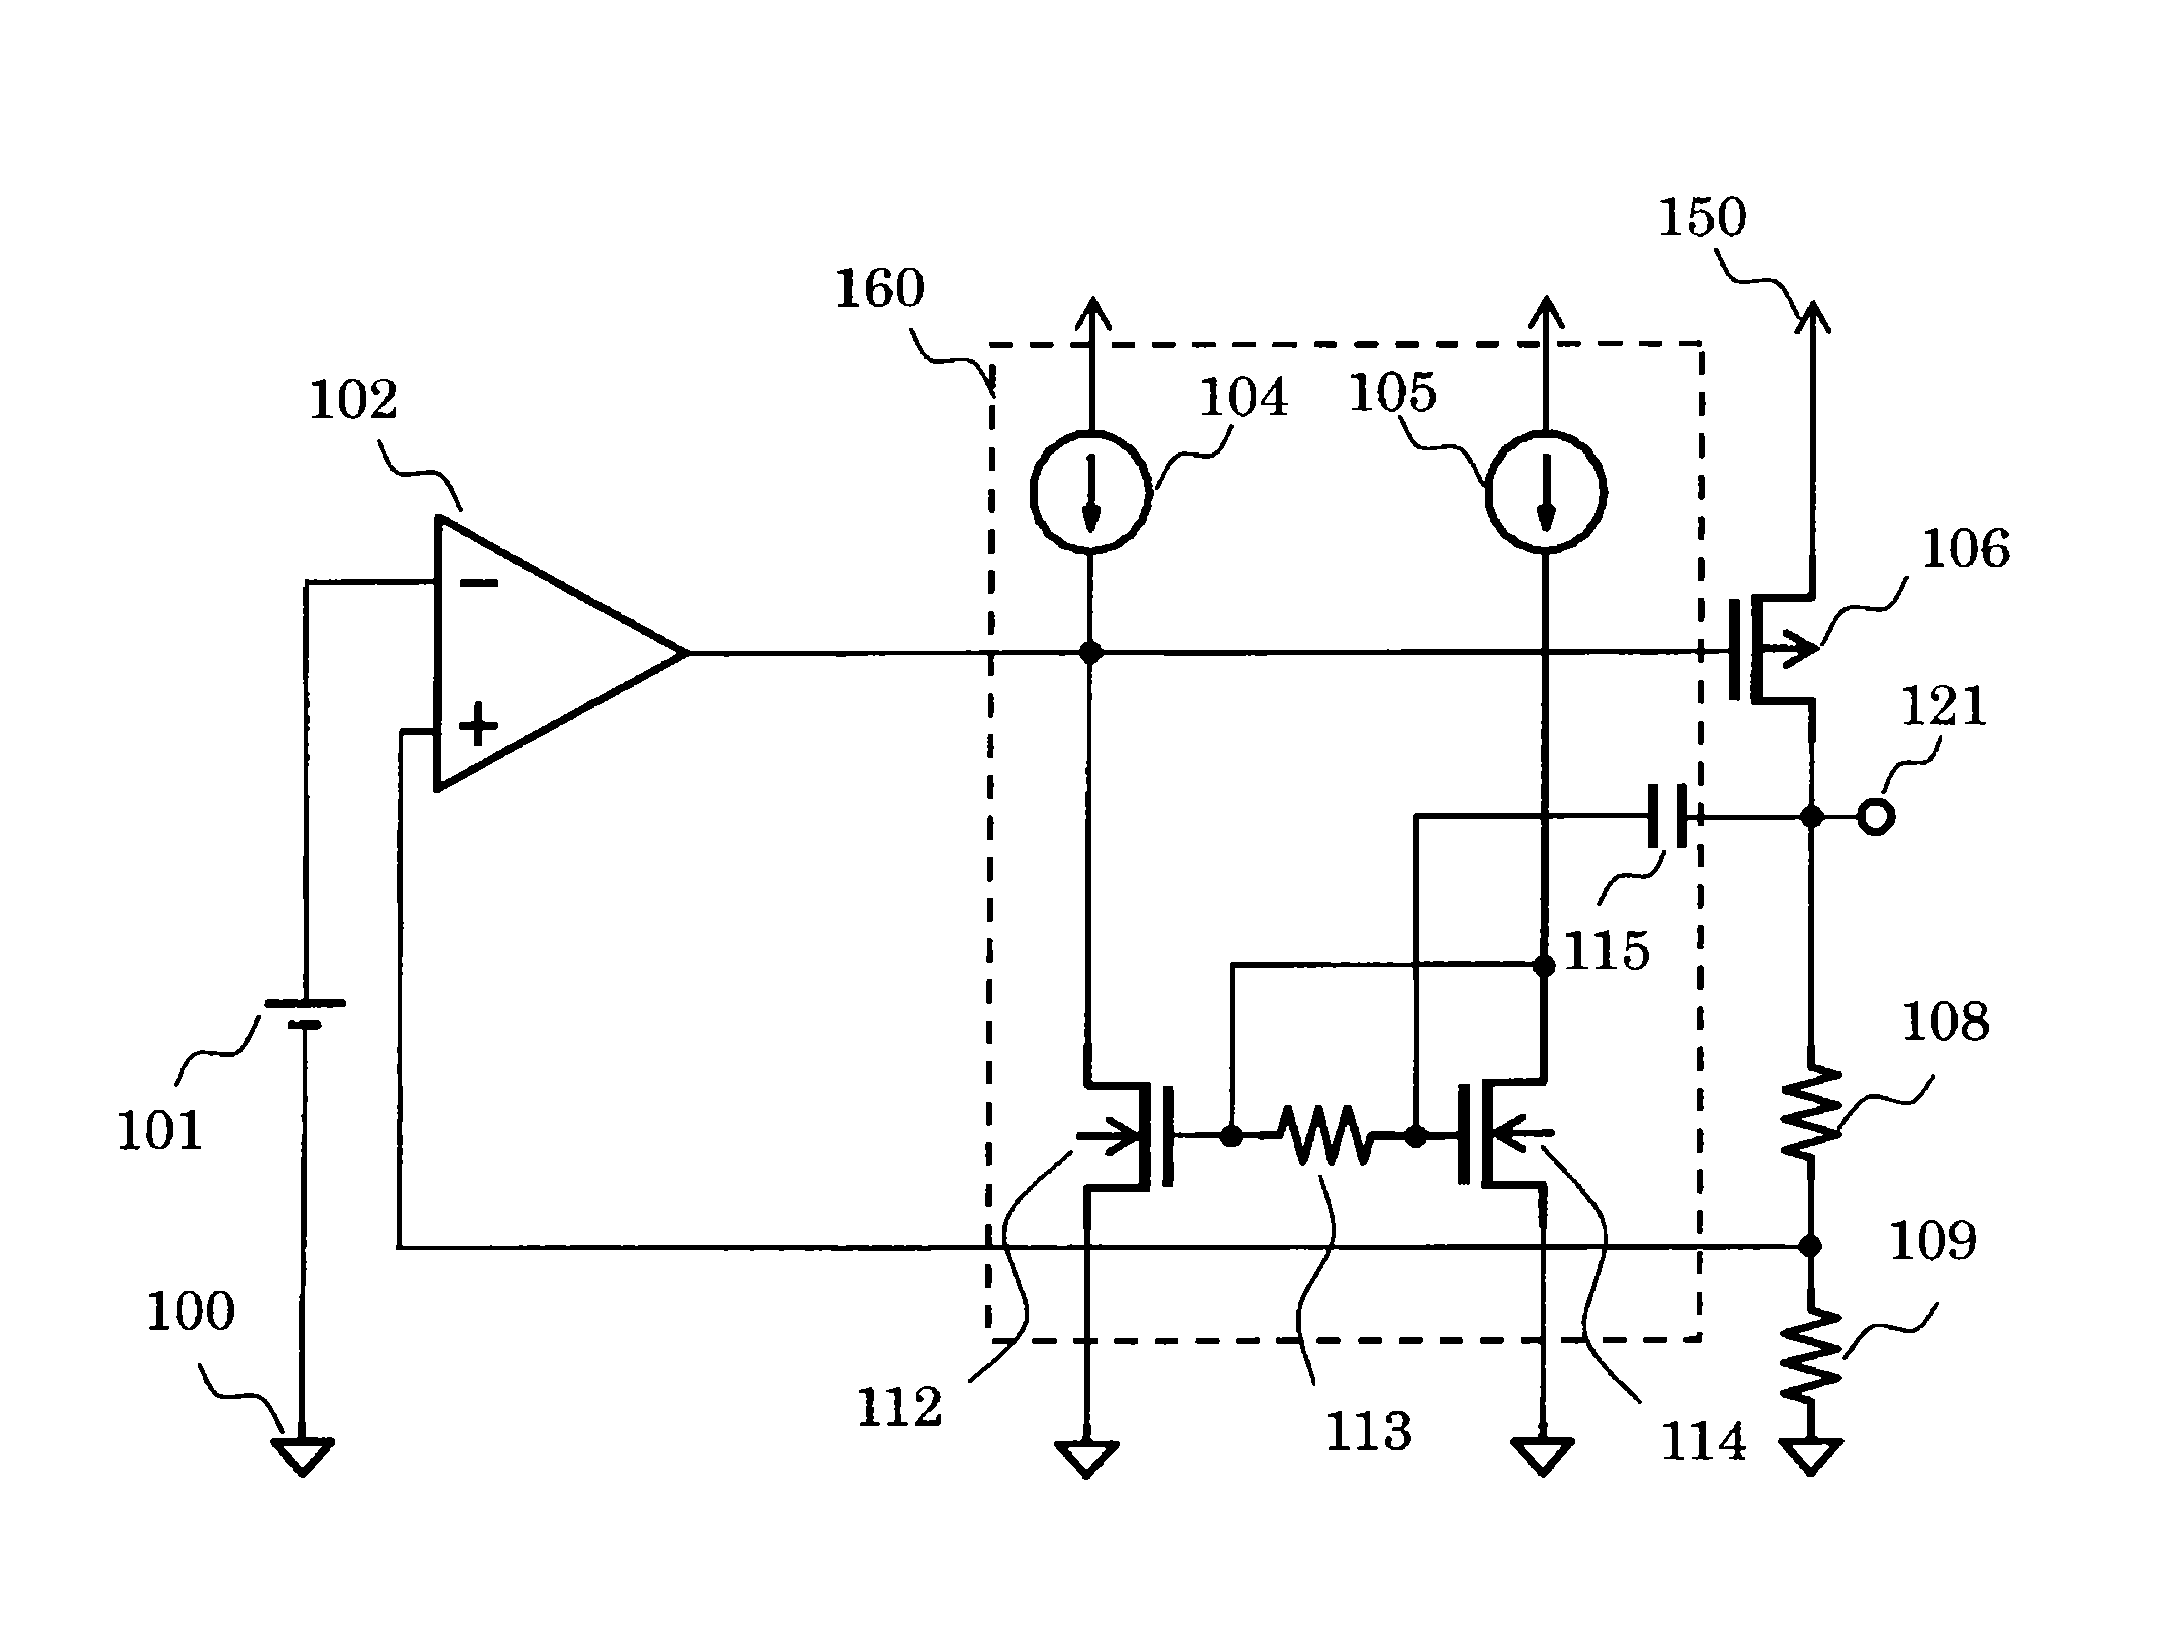 Voltage regulator having a phase compensation circuit